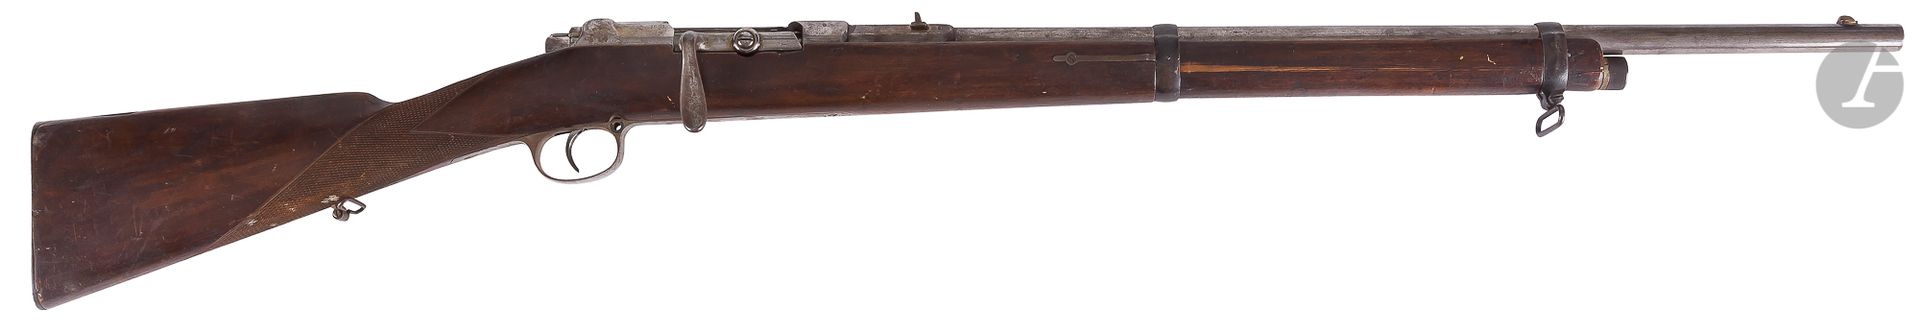 Null 毛瑟步枪1871-84型改装，口径11毫米，有弯曲的枪栓和管状弹匣。

圆形枪管，侧面有雷鸣般的印记，枪冠下有 "FR"，"Spandau"。臀部有 &hellip;